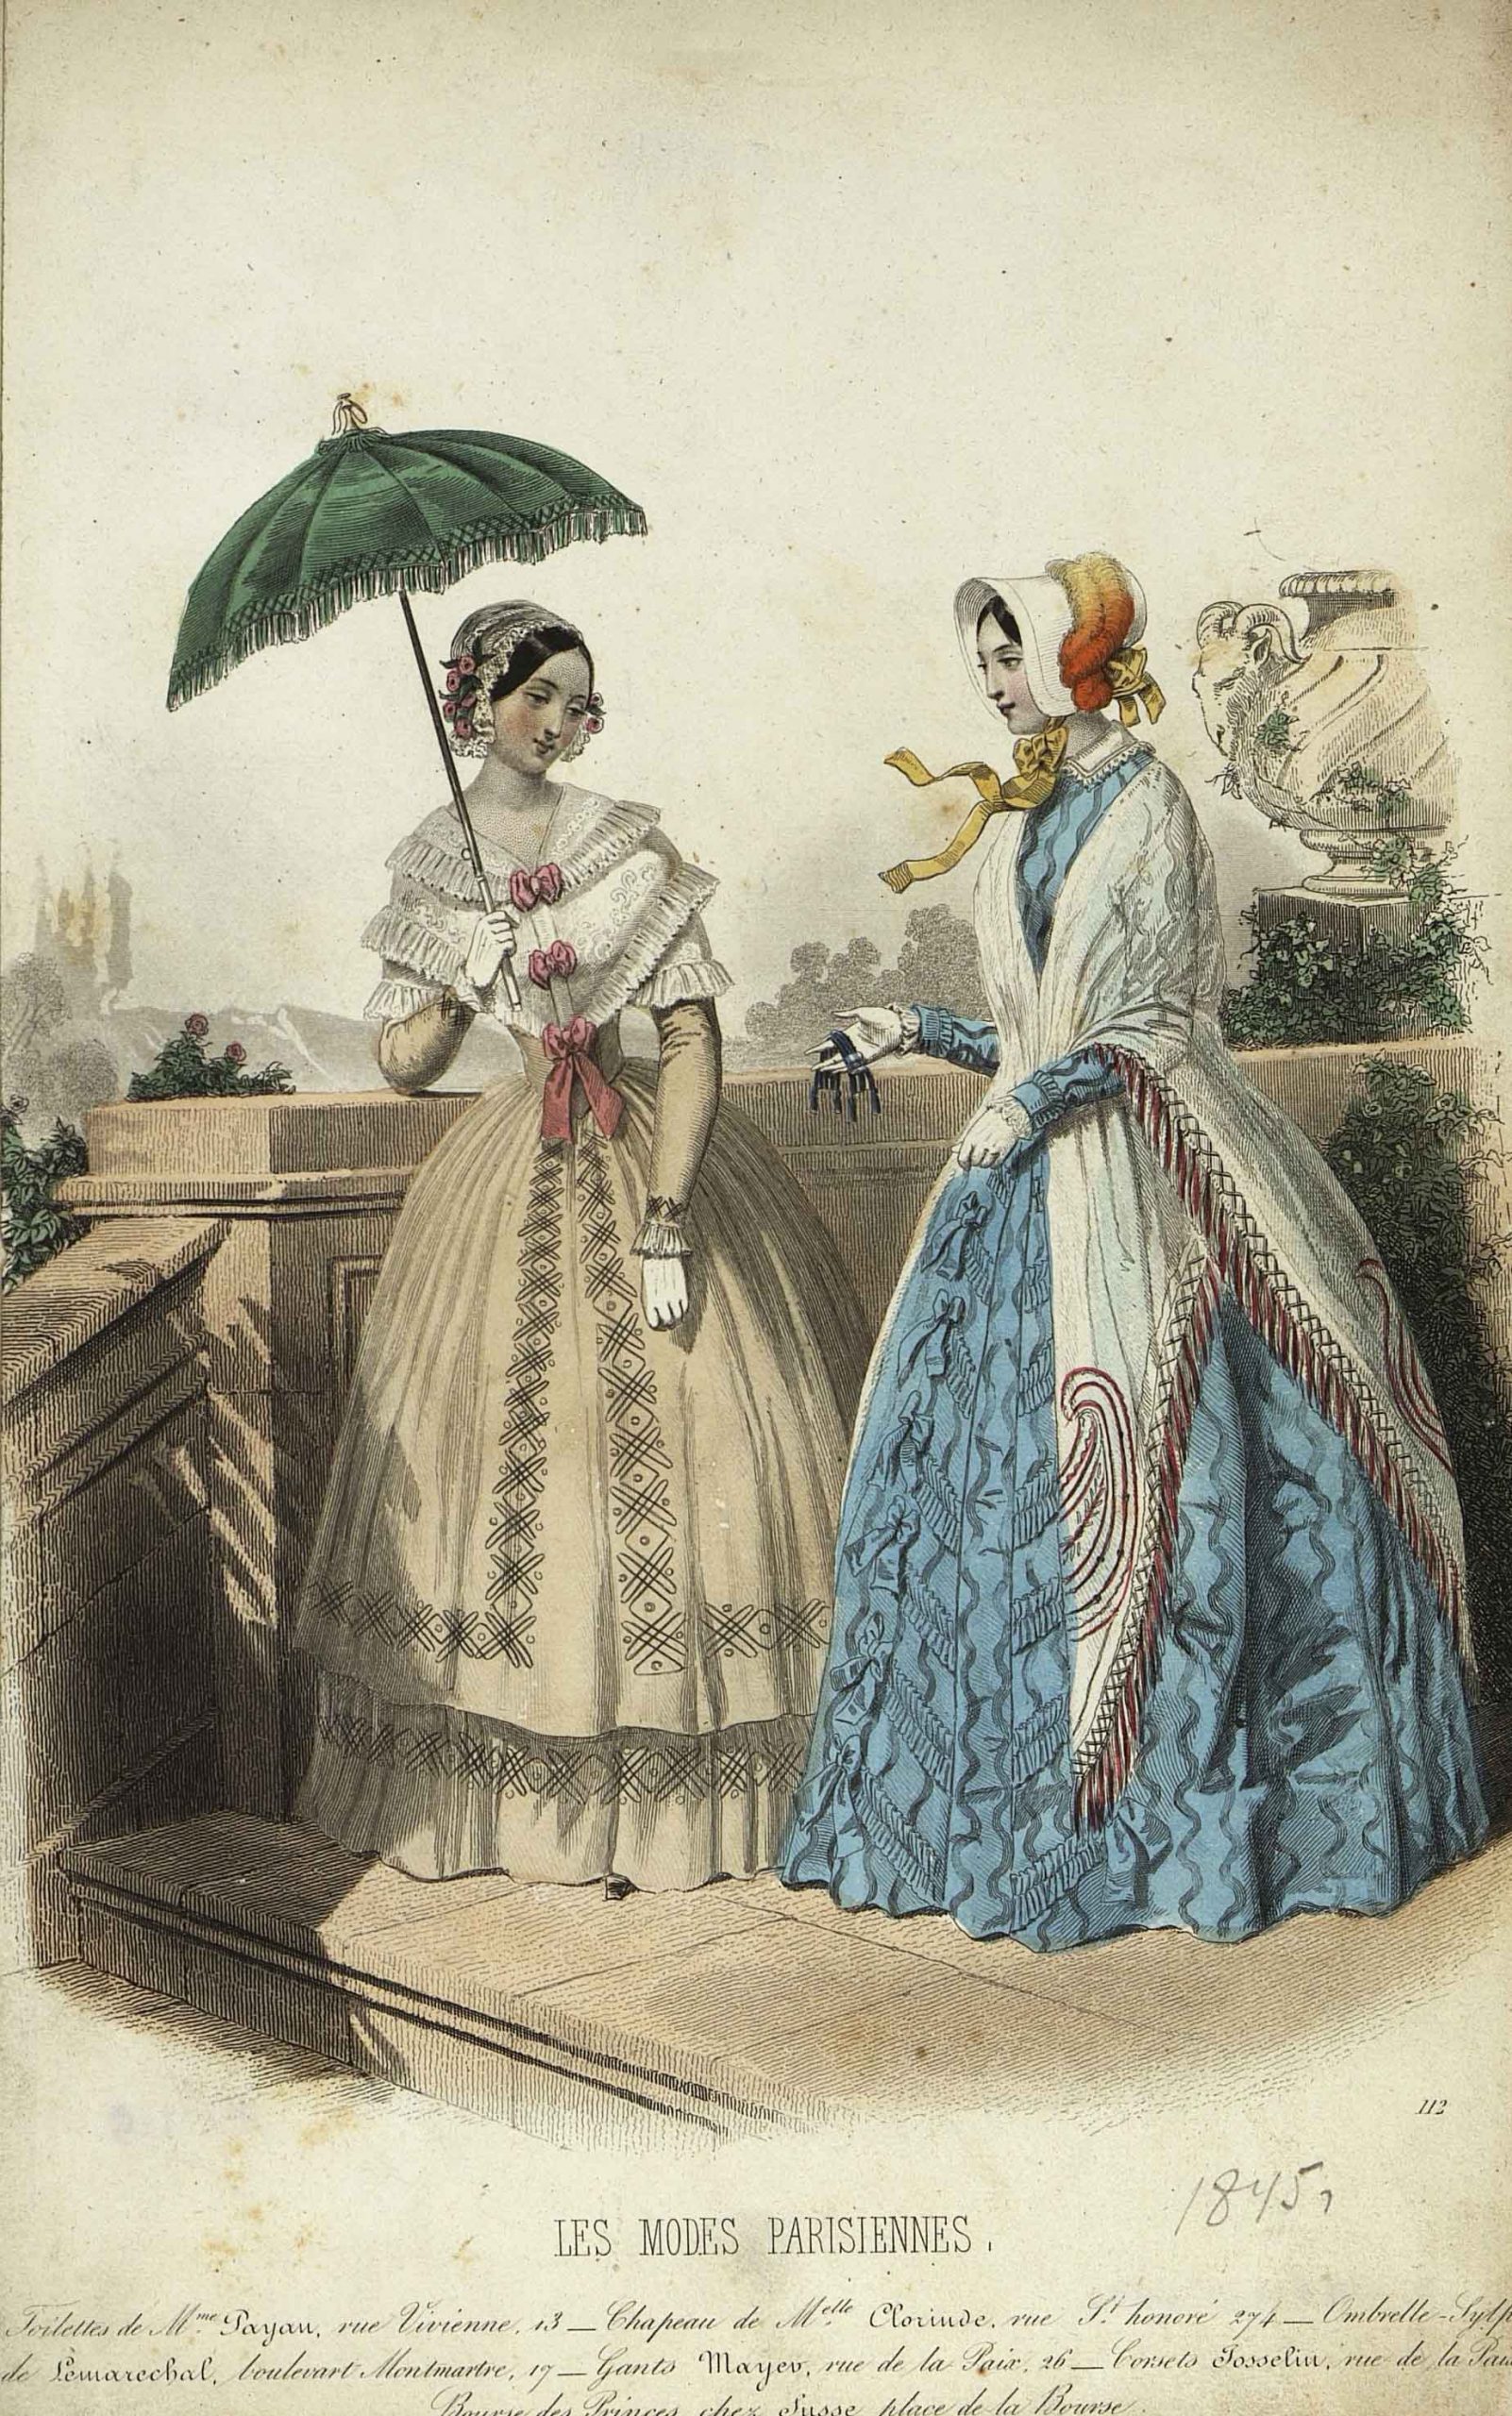 Два модных дамских костюма. Лист из журнала «Les Modes Parisiennes». Париж,1845